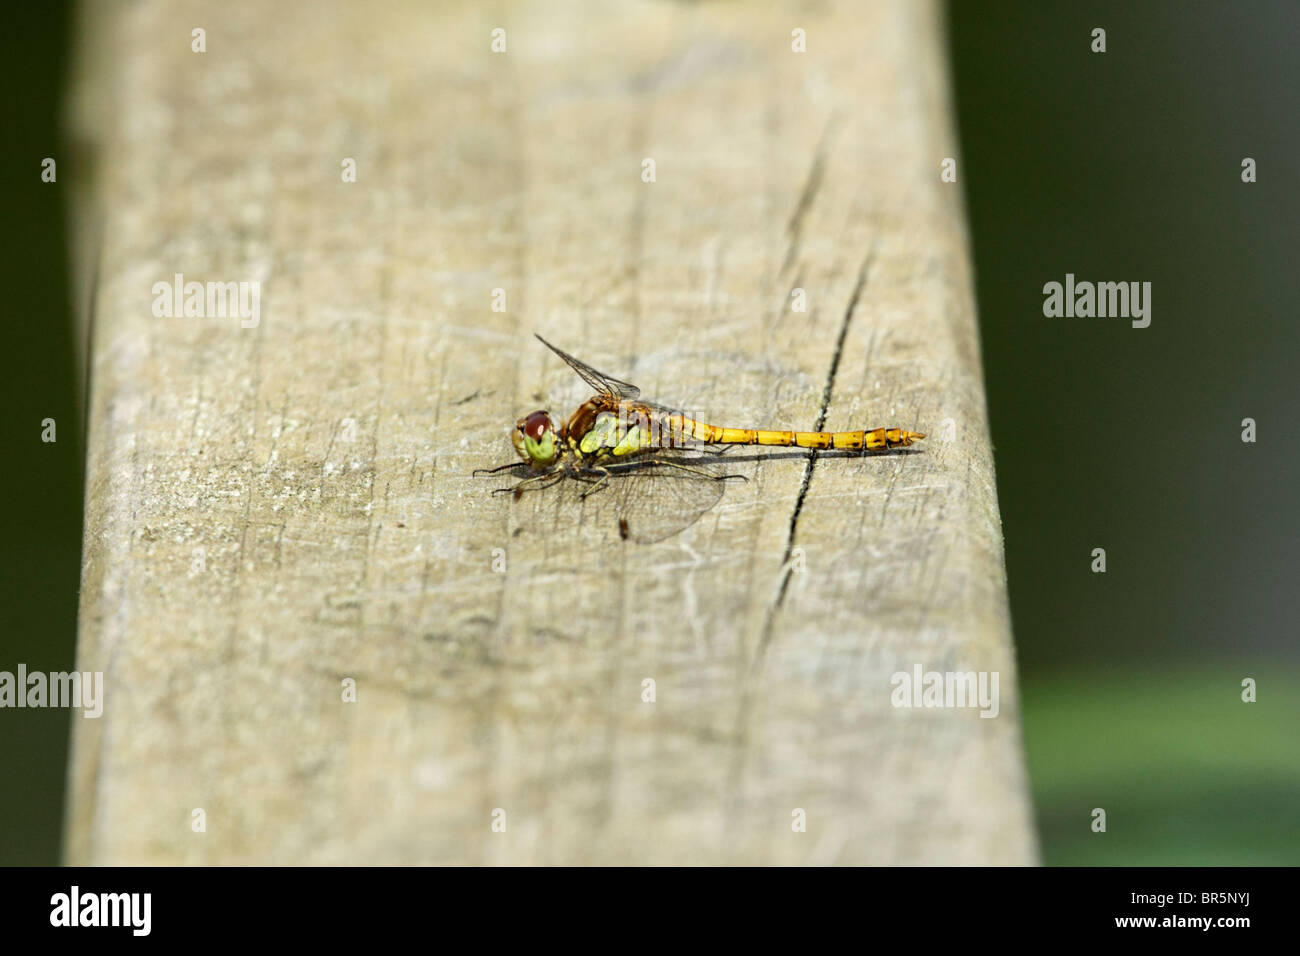 Female Common Darter dragonfly on wooden handrail Stock Photo